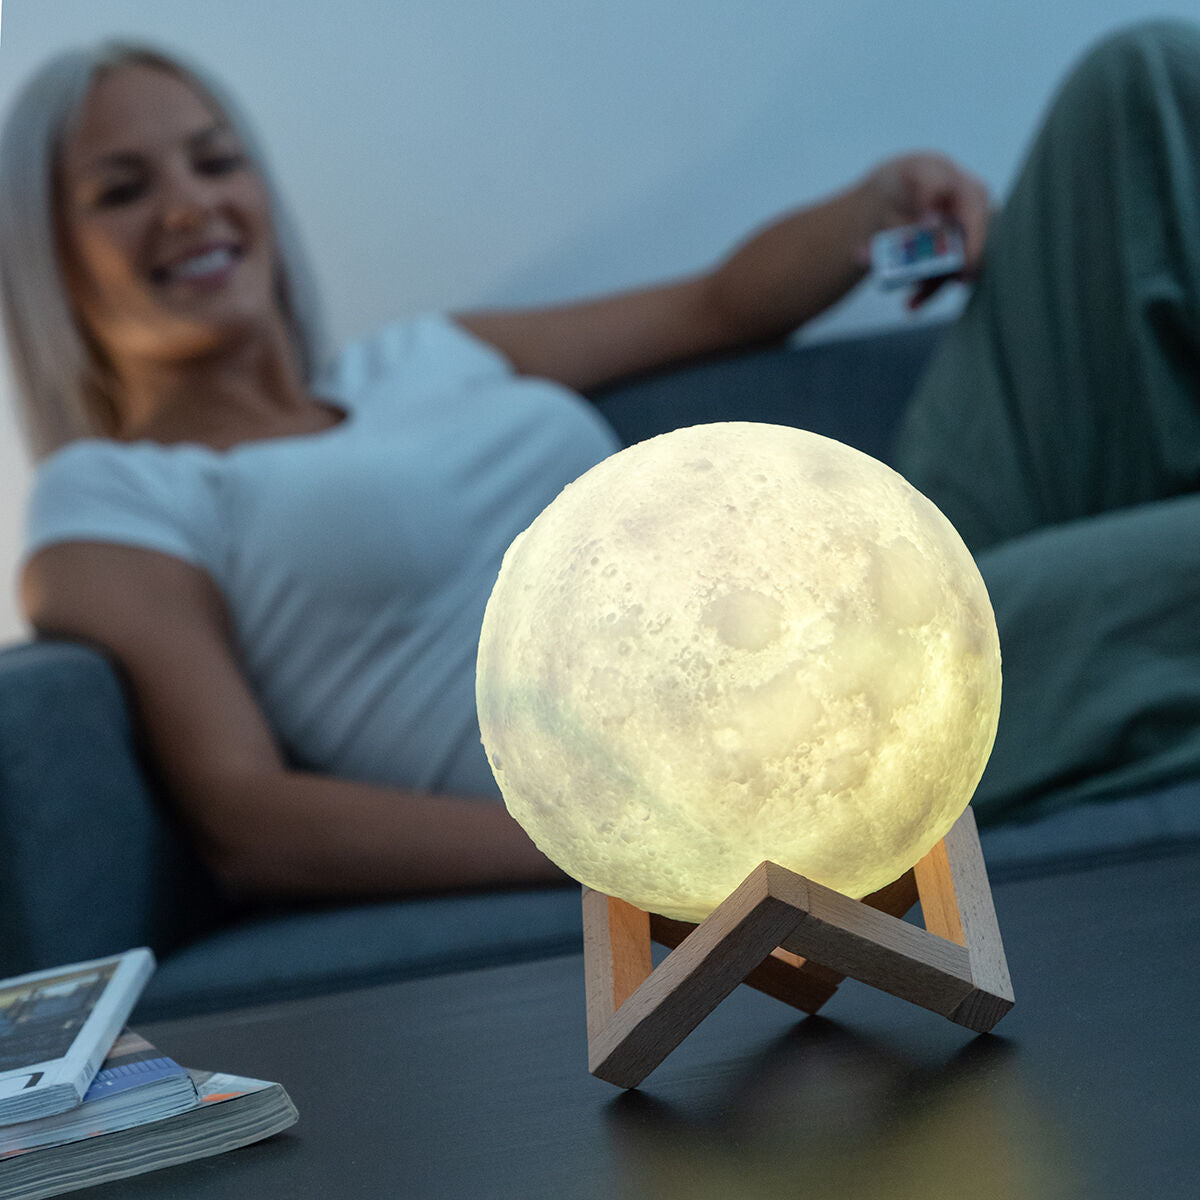 Kaufe Wiederaufladbare LED Lampe Mond Moondy InnovaGoods bei AWK Flagship um € 31.00